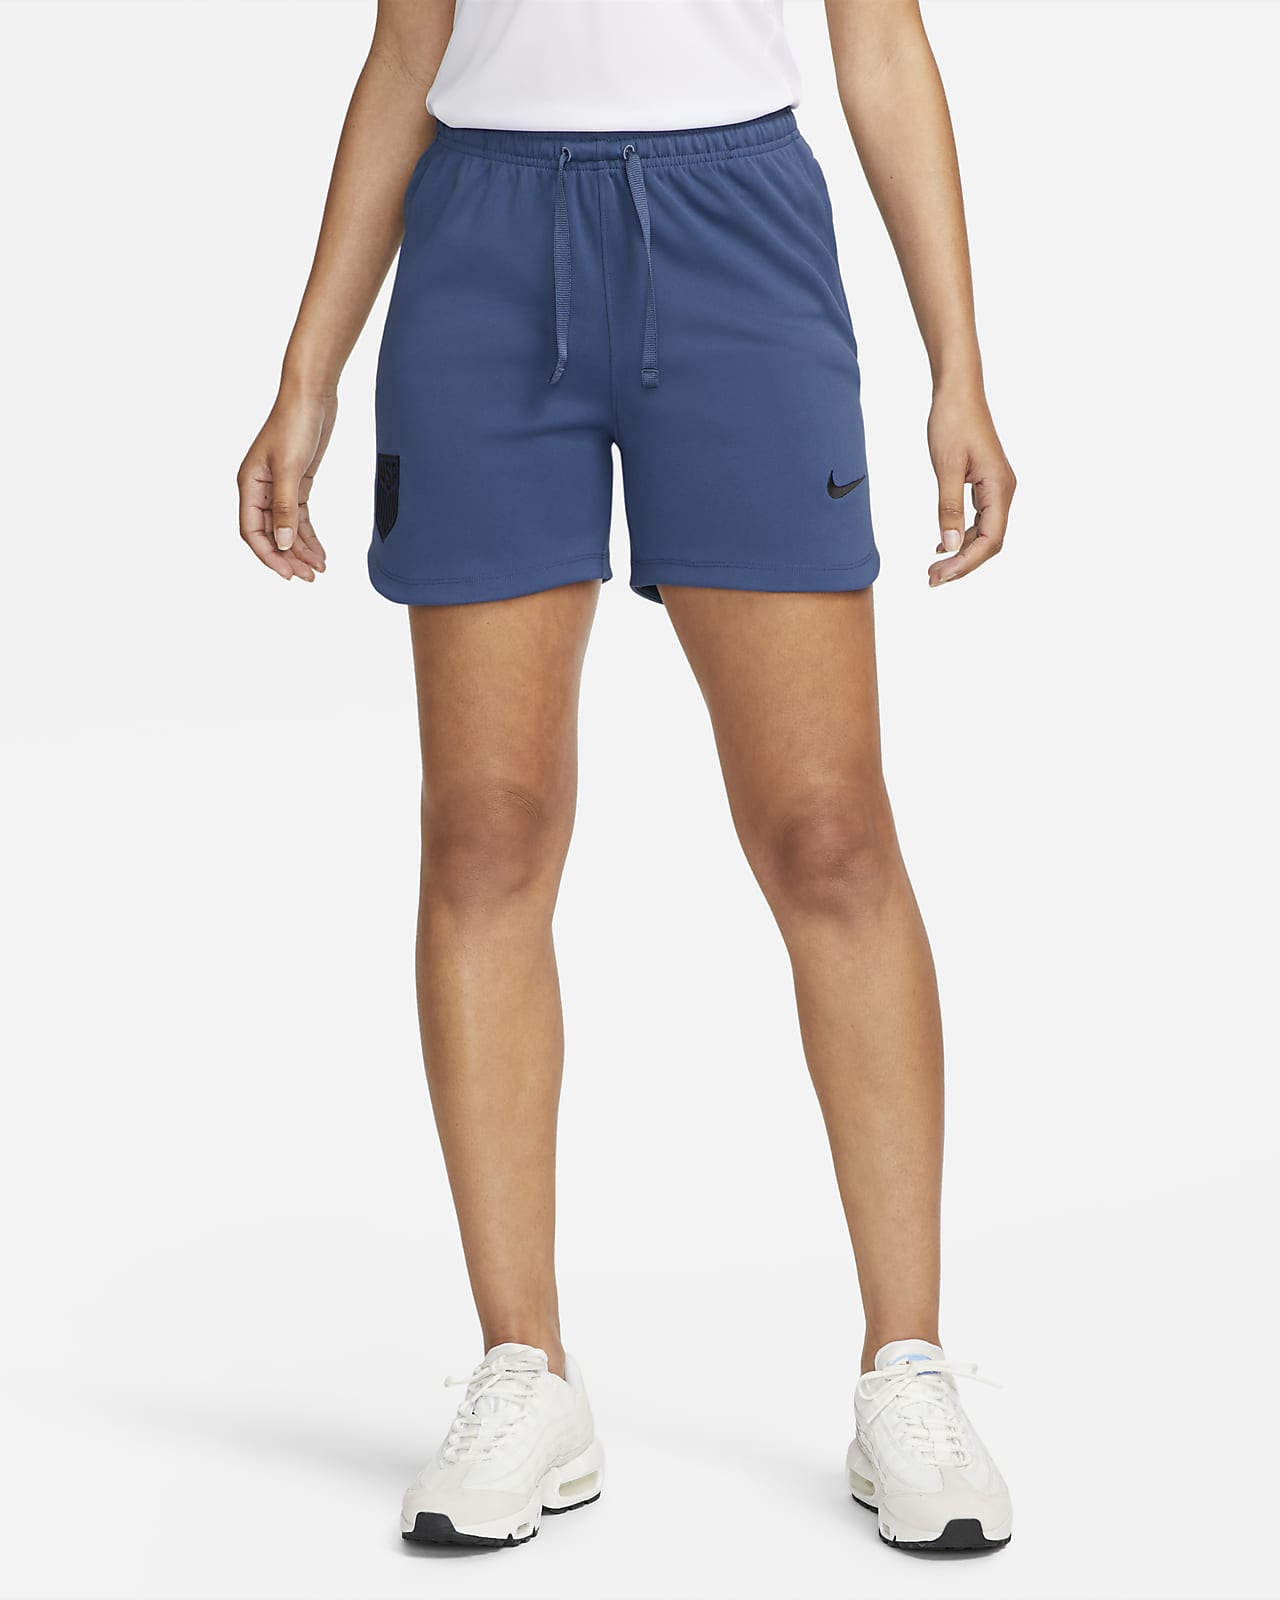 U.S. Women's Nike Dri-FIT Knit Soccer Shorts